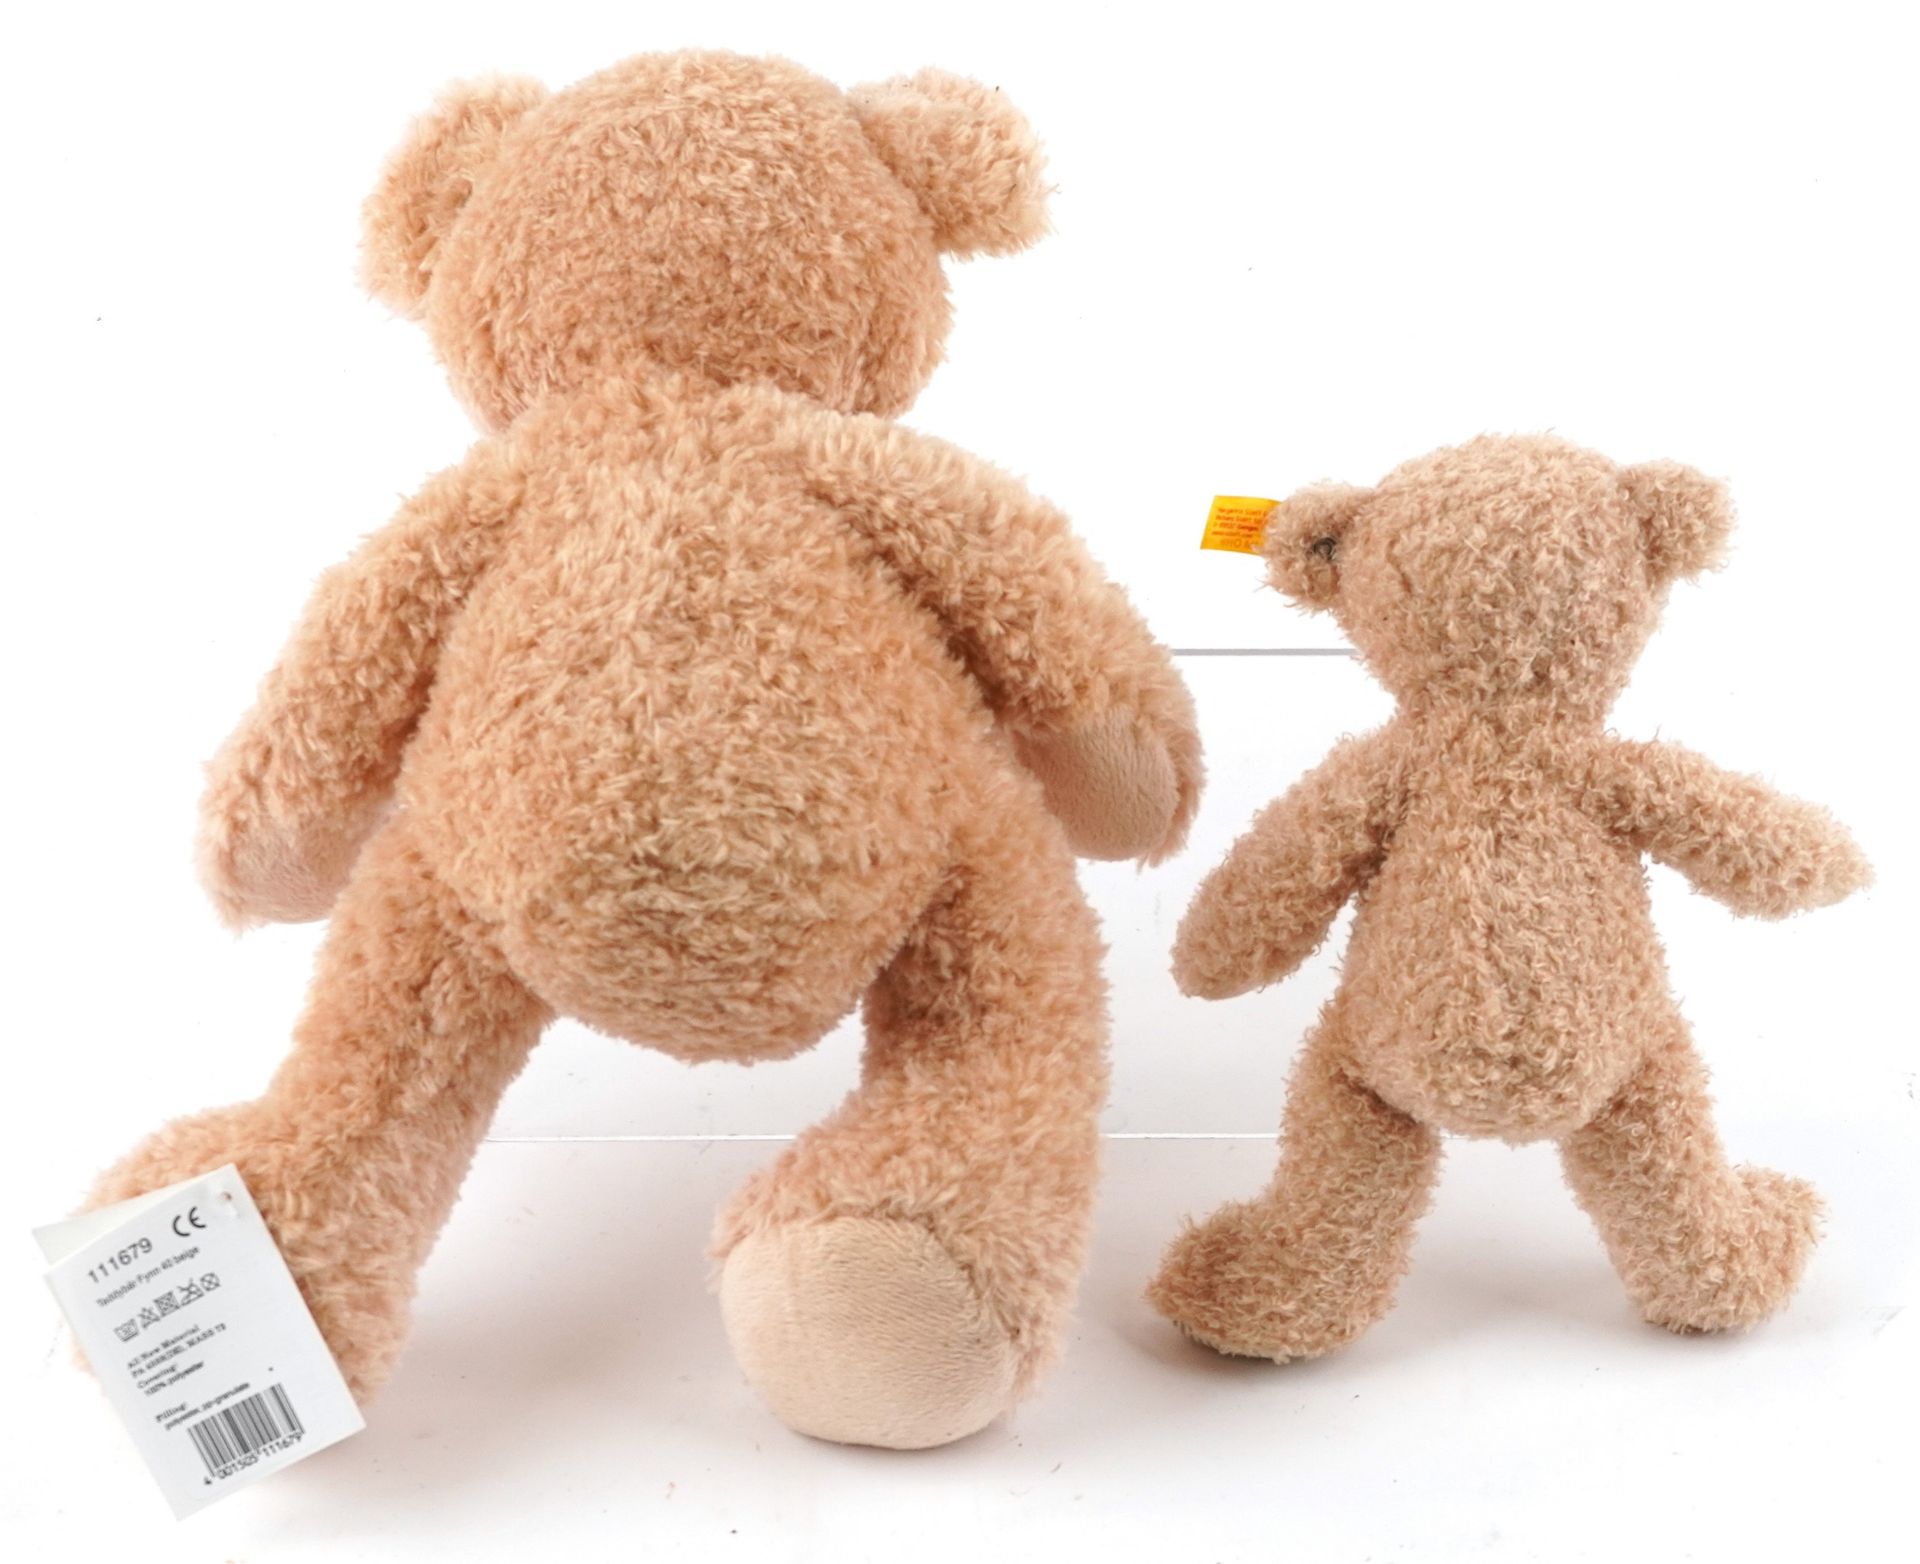 Two Steiff Original teddy bears including Fynn, the largest 38cm high : For further information on - Bild 2 aus 3